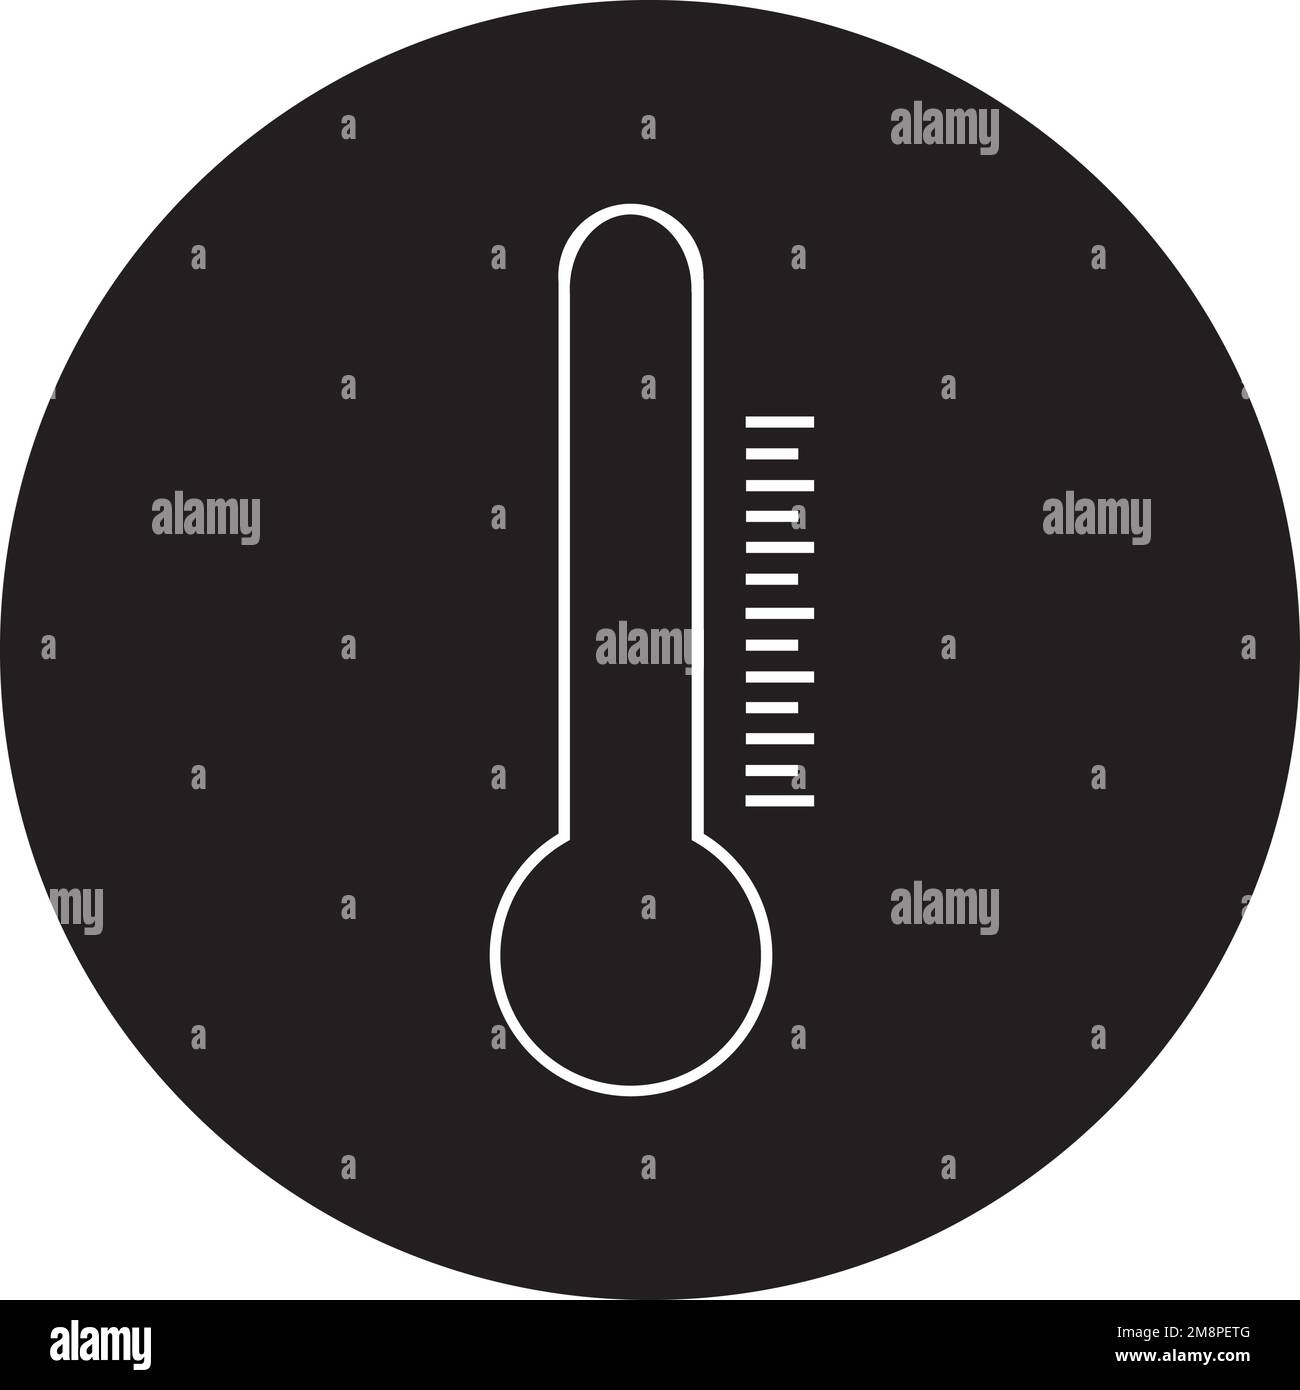 termometer logo stock illustration design Stock Vector